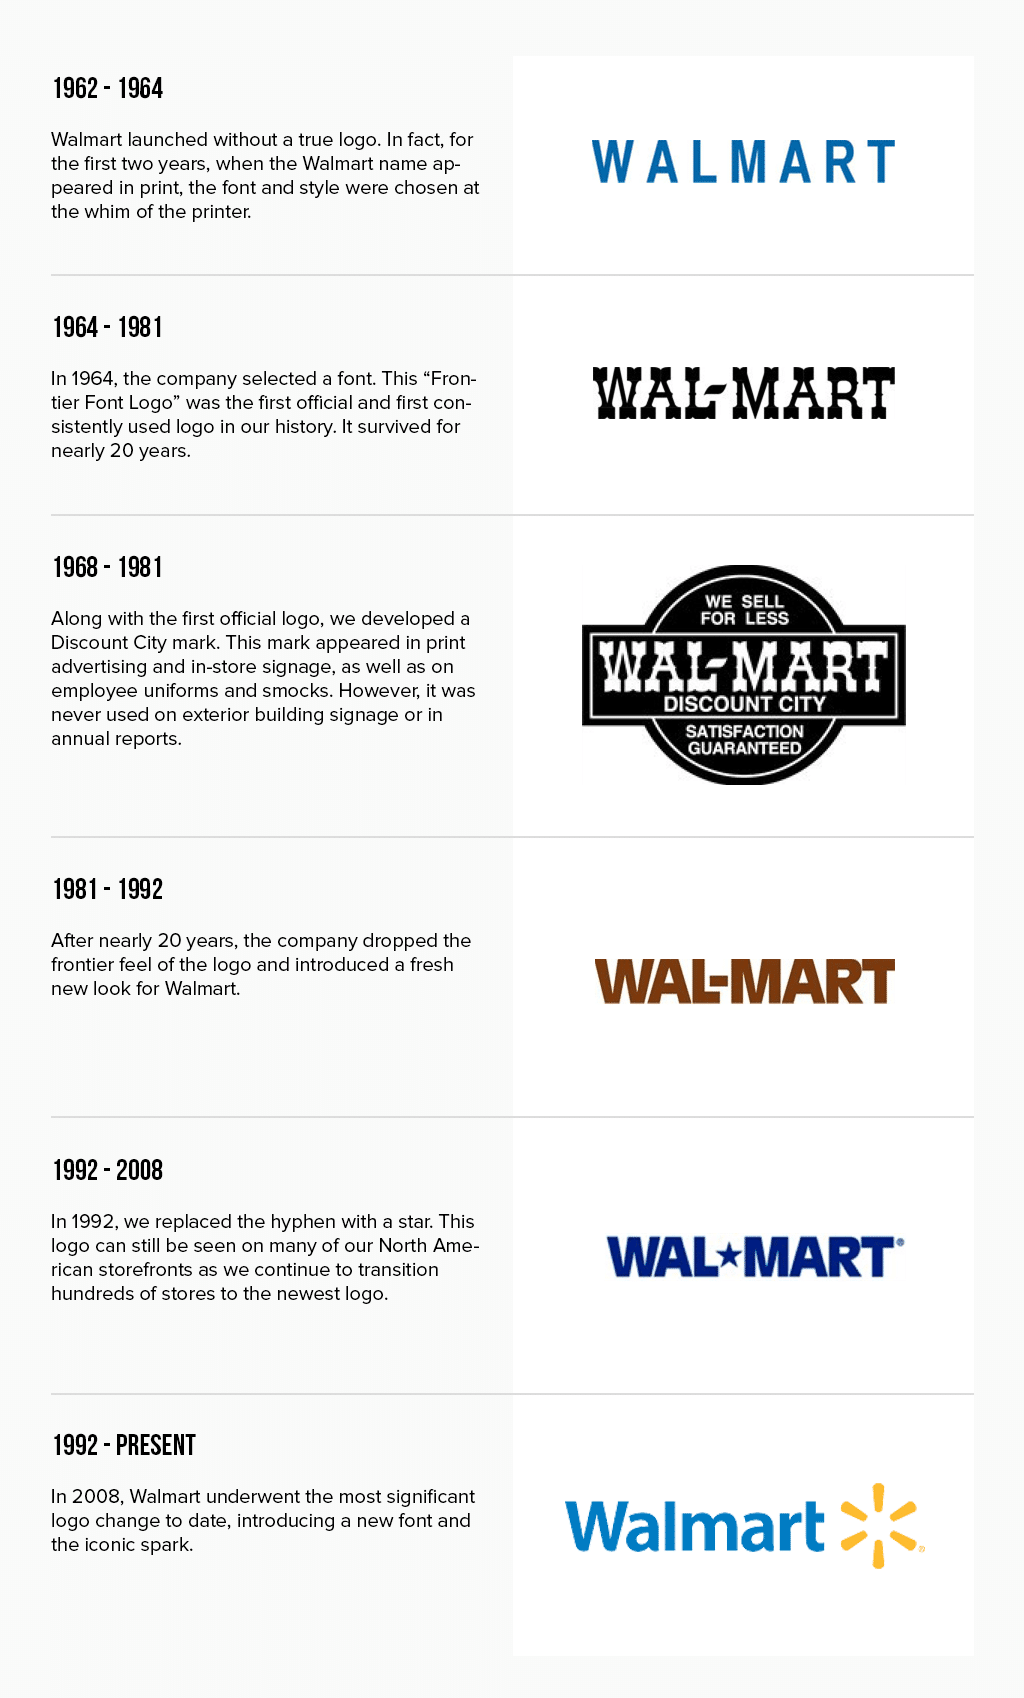 Walmart logo evolution